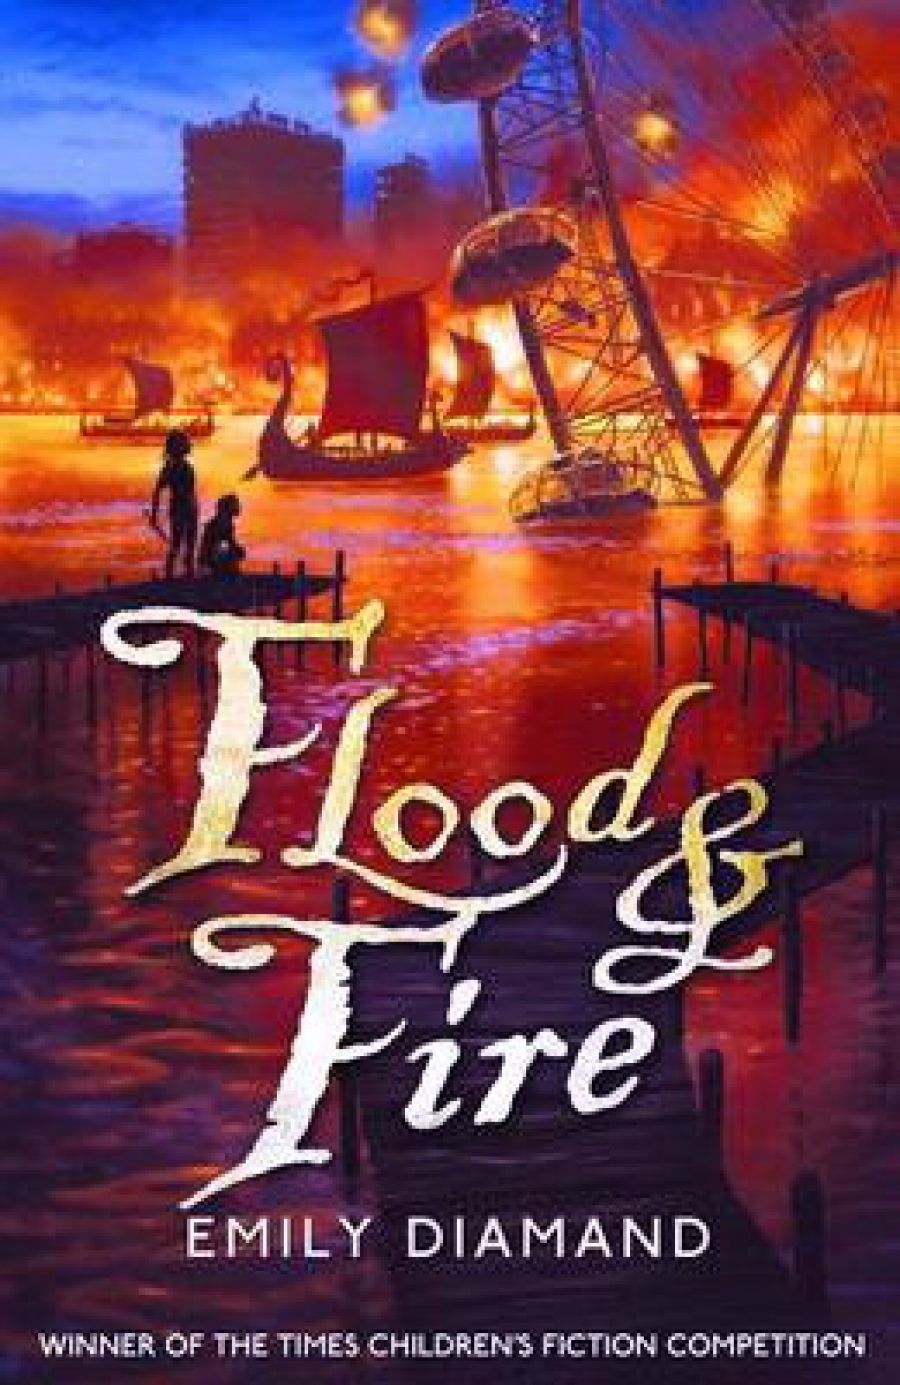 Diamand, Emily Flood and Fire 